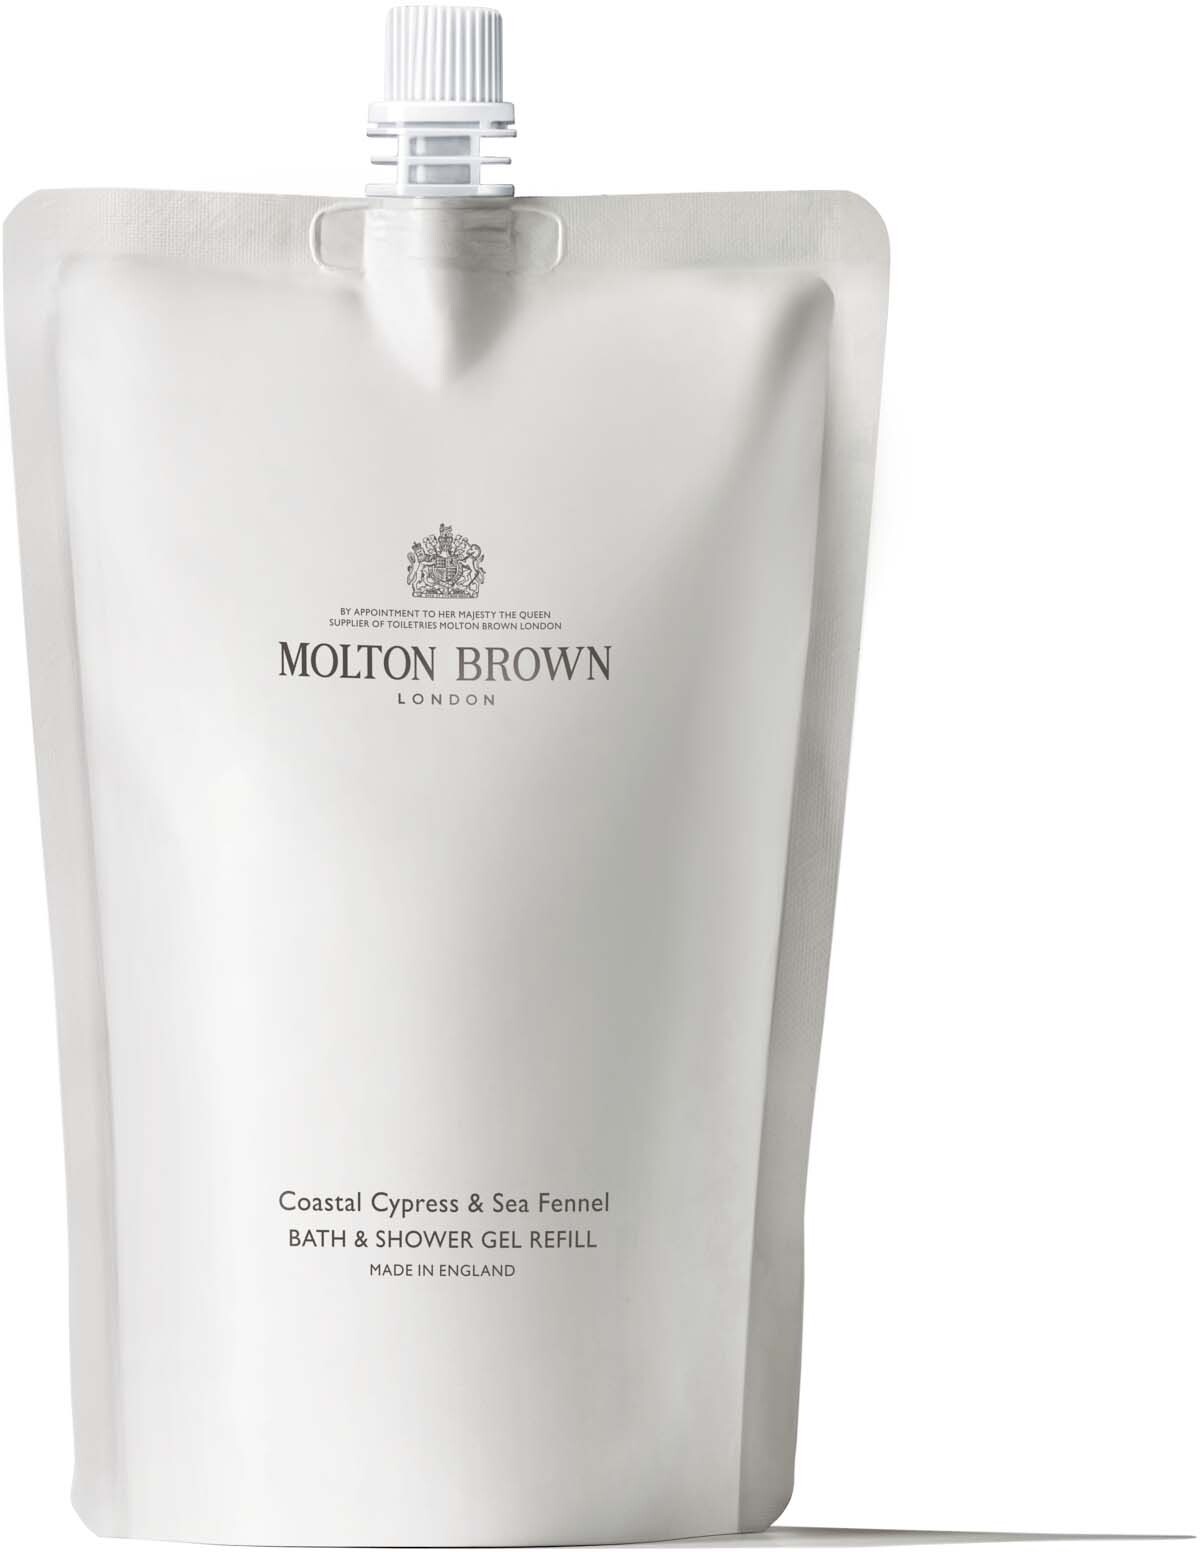 Molton Brown Bath & Shower Gel Refill